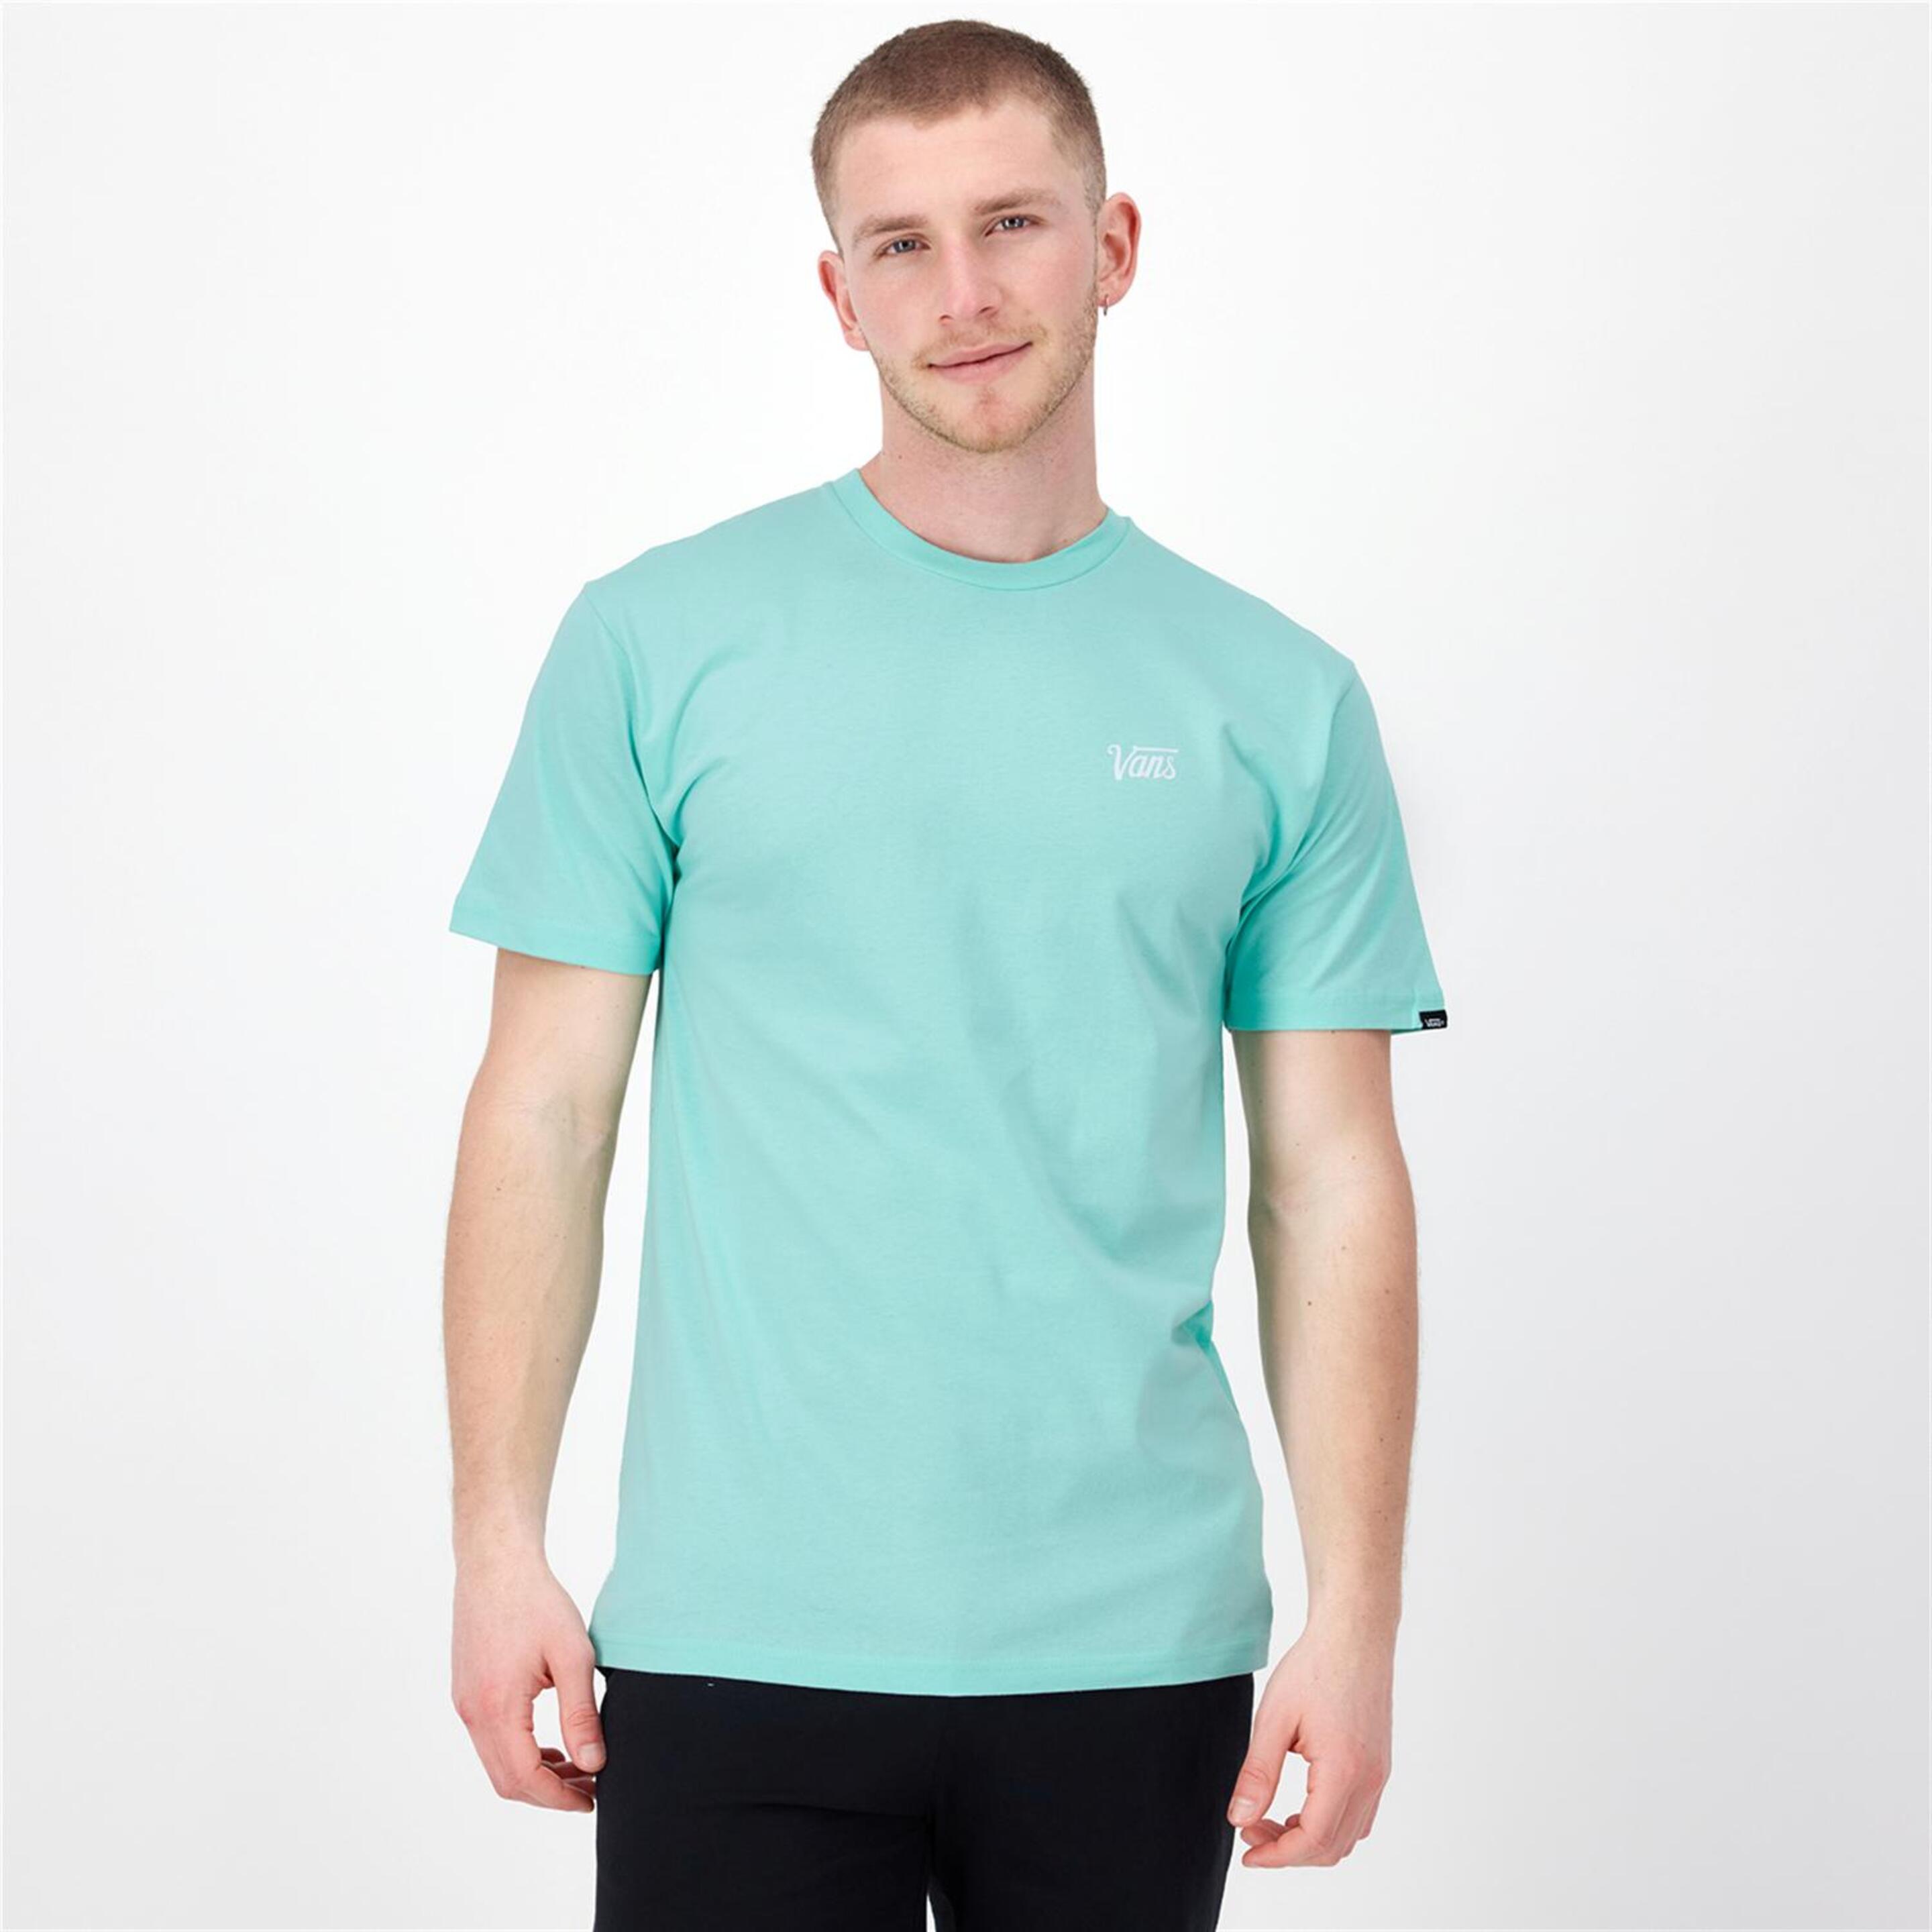 Vans Small Logo - azul - Camiseta Hombre